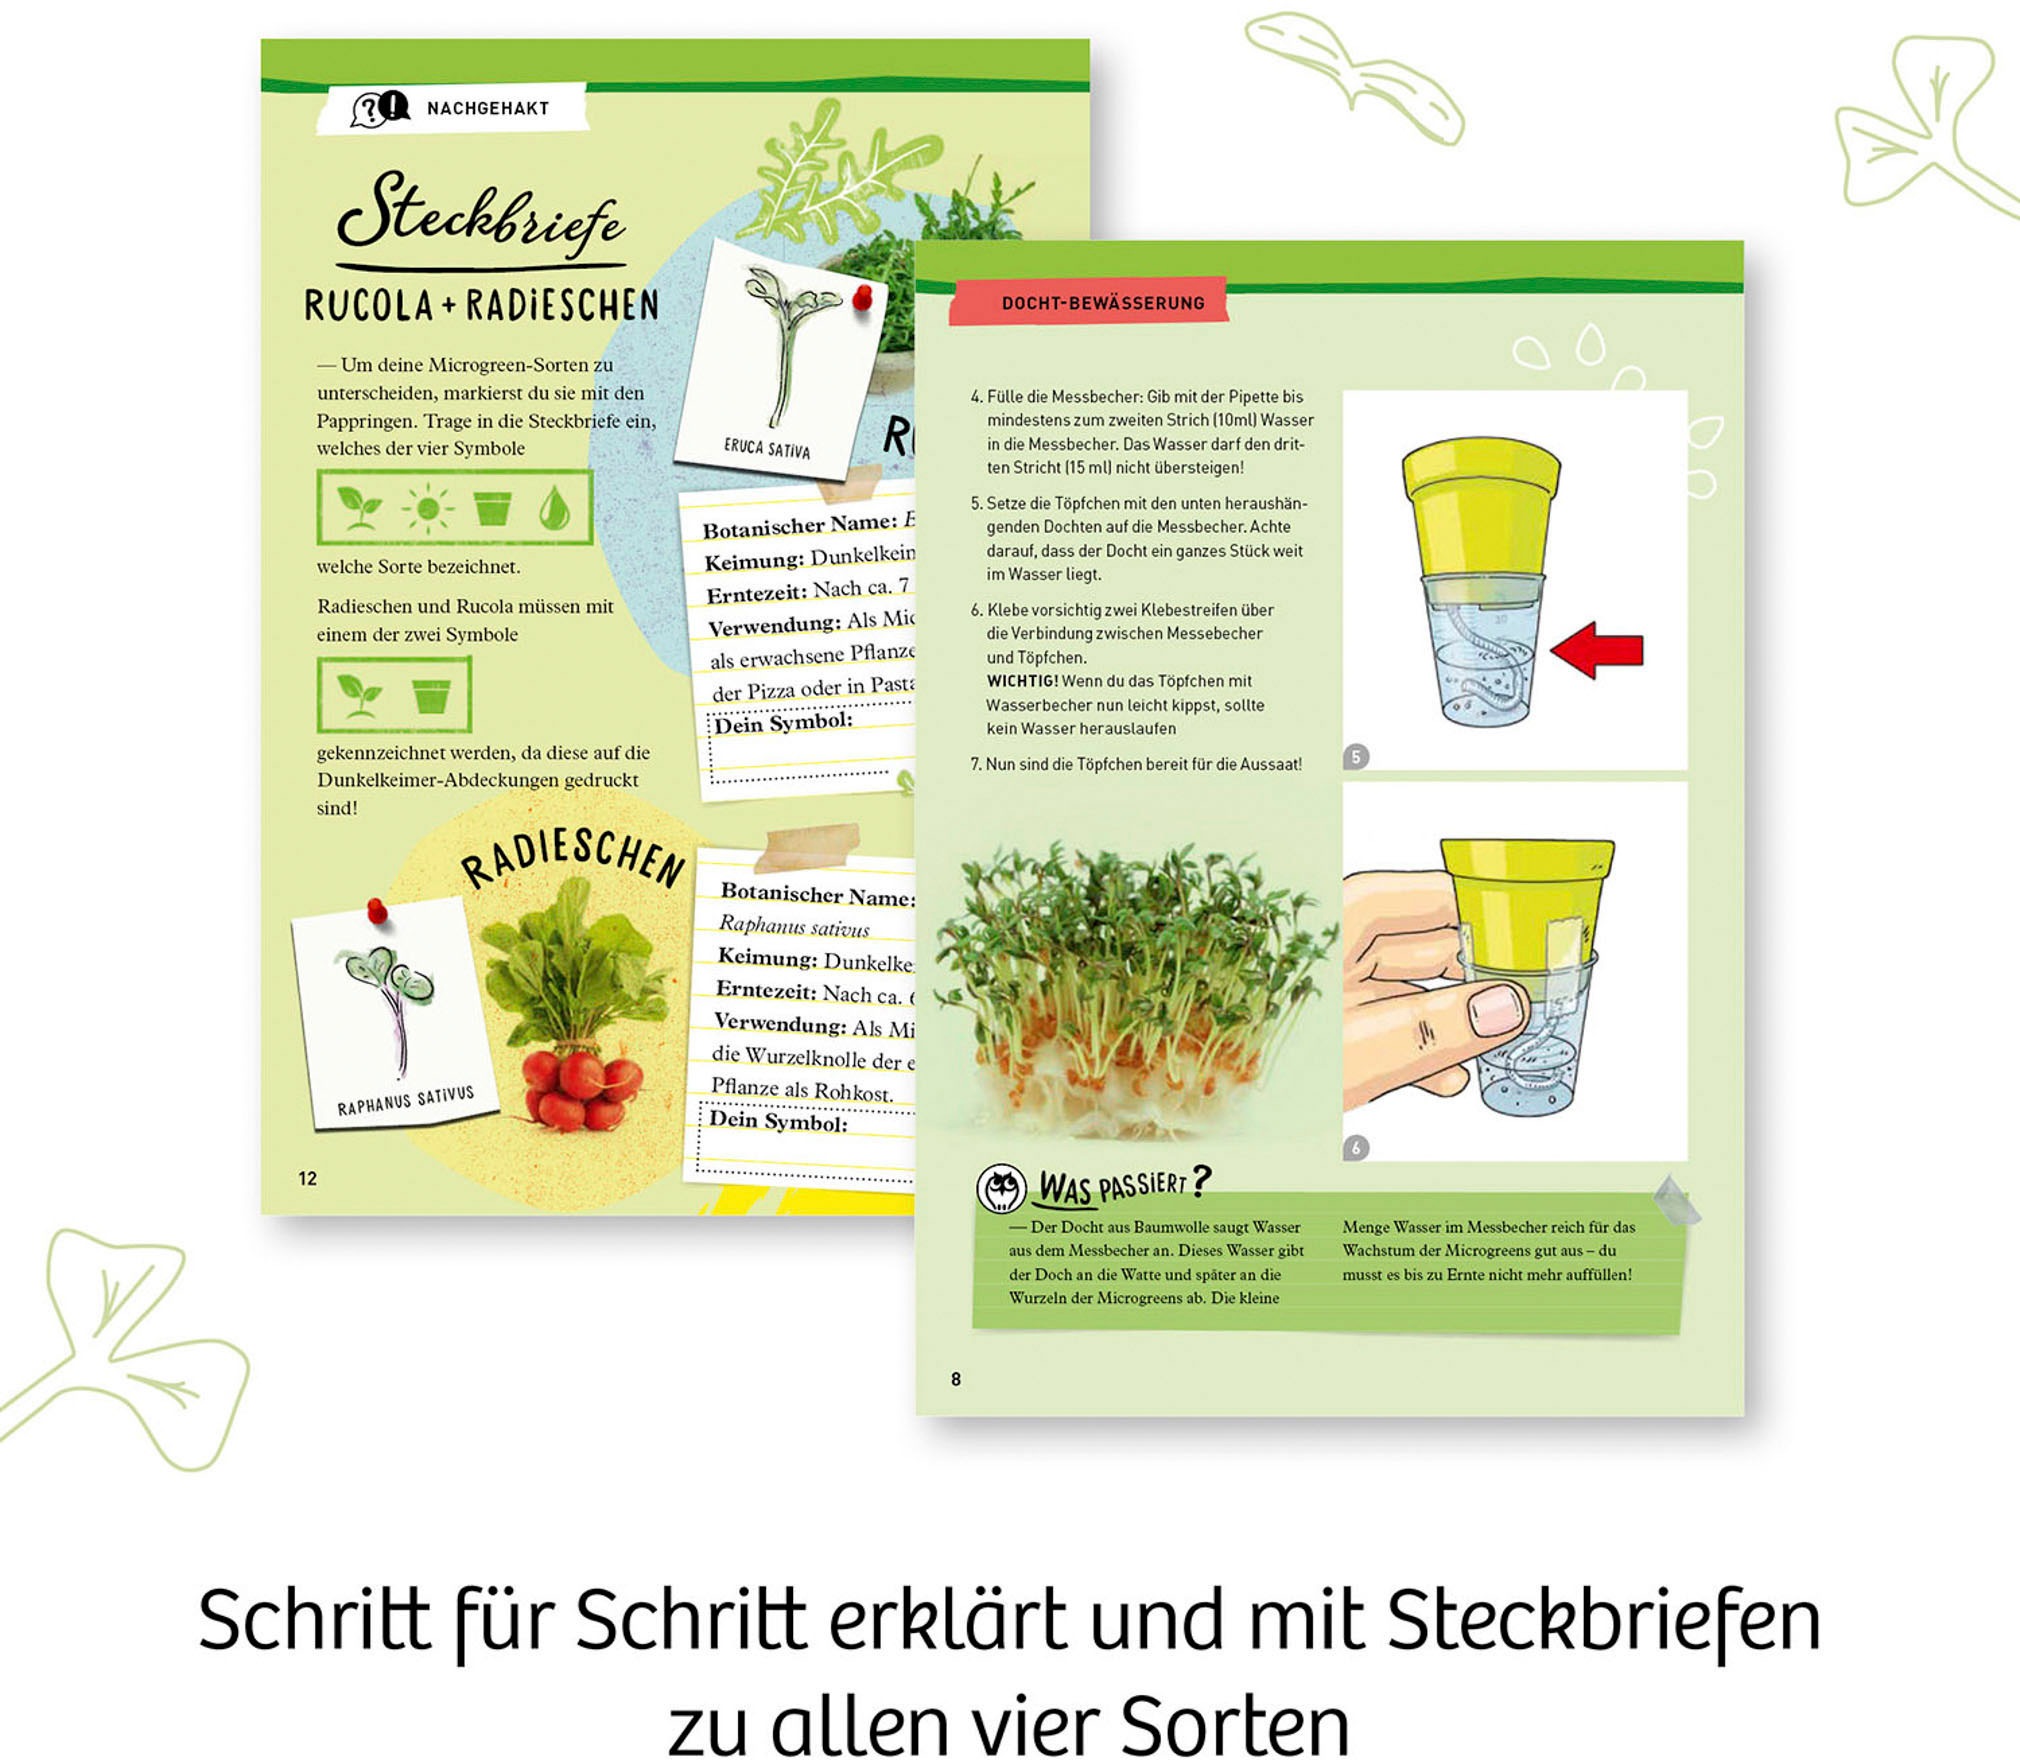 Kosmos Experimentierkasten »Microgreen-Garten«, Made in Germany